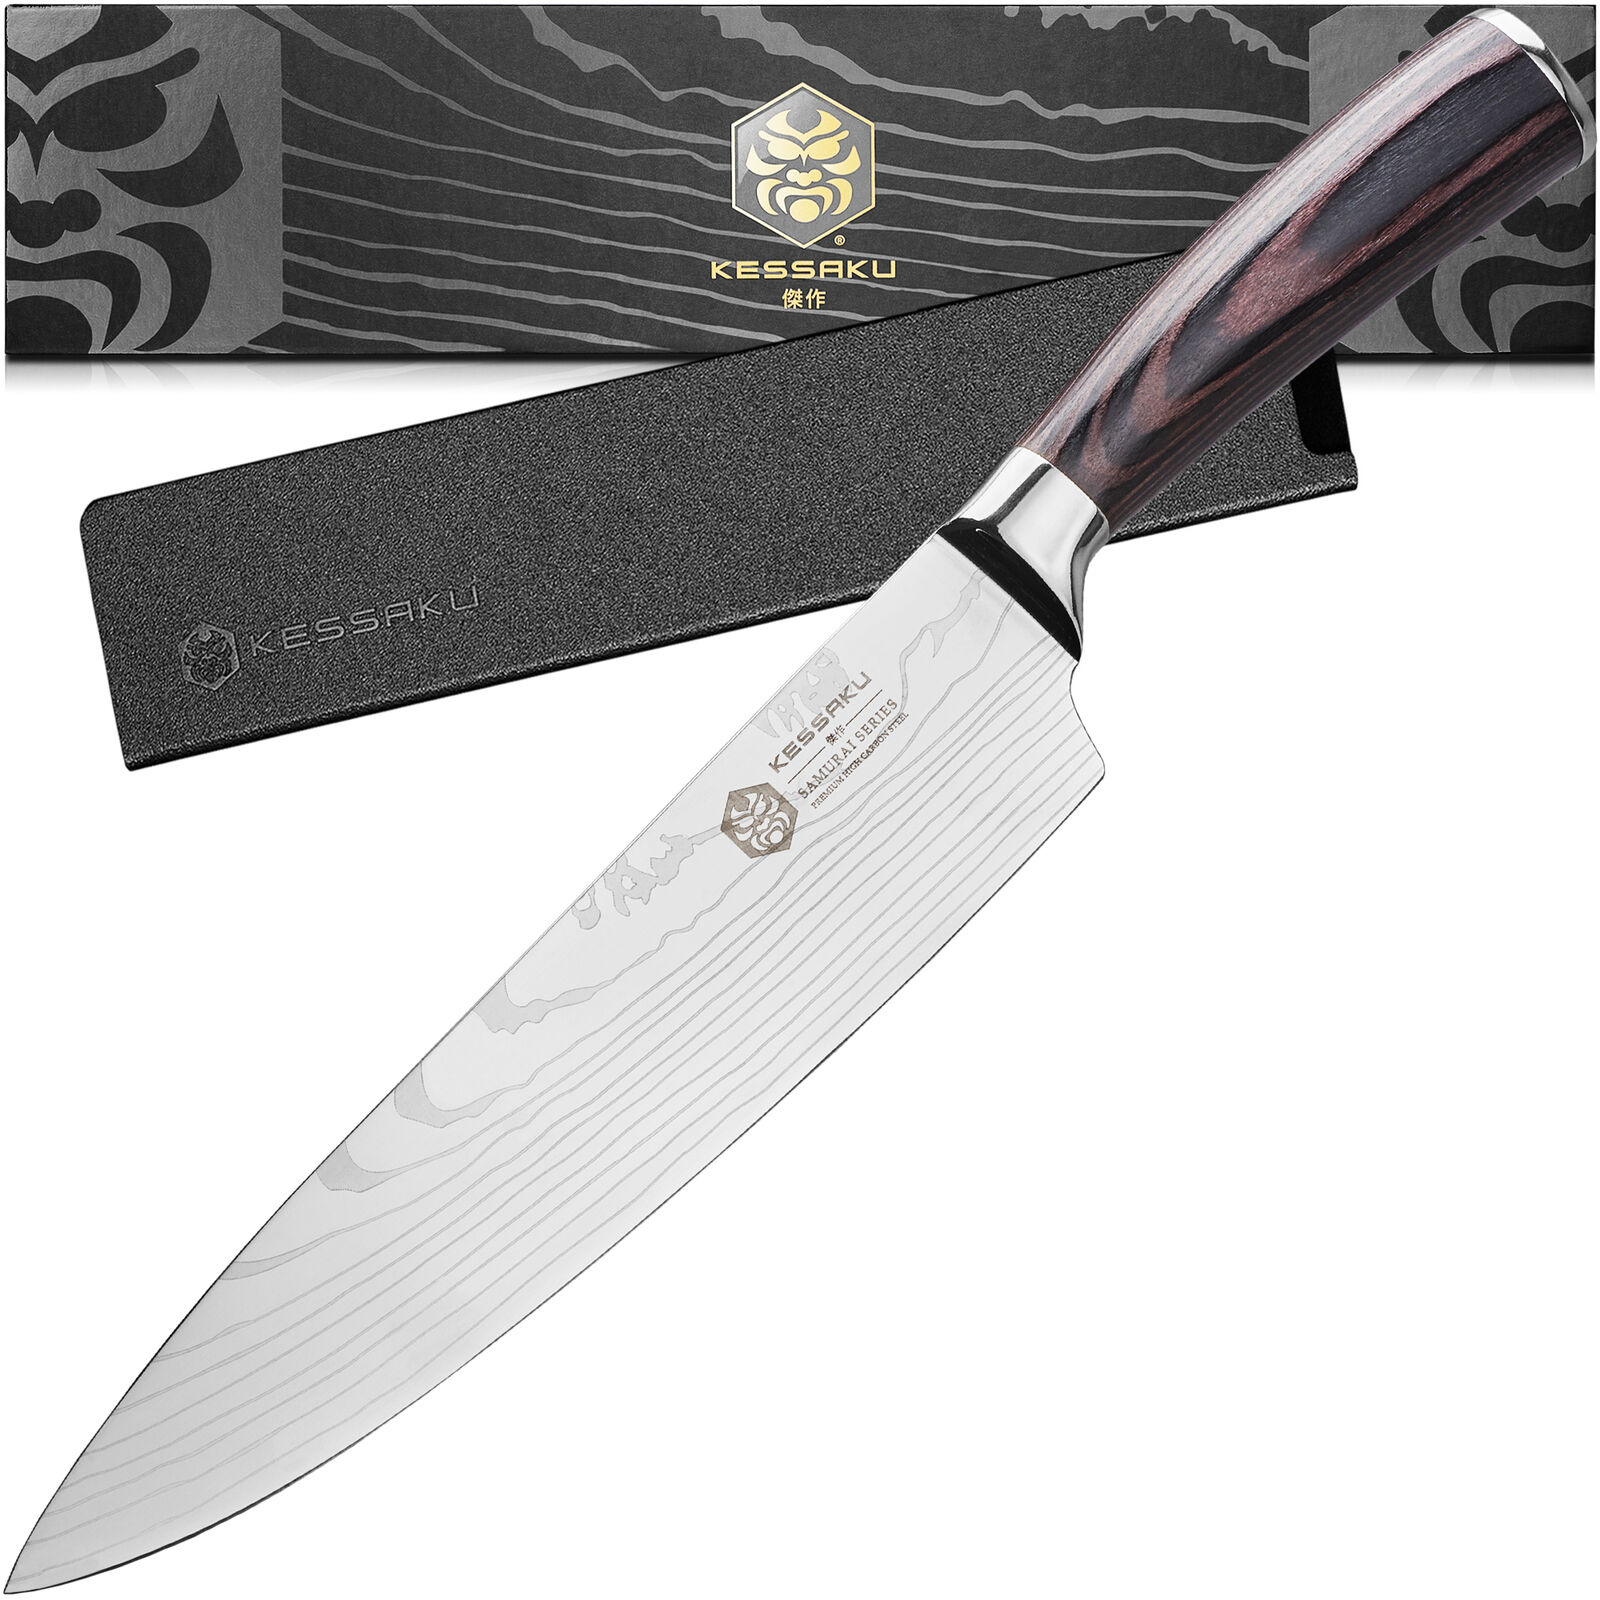 Kessaku 8-Inch Chef Knife - Samurai Series - High Carbon 7Cr17MoV Steel